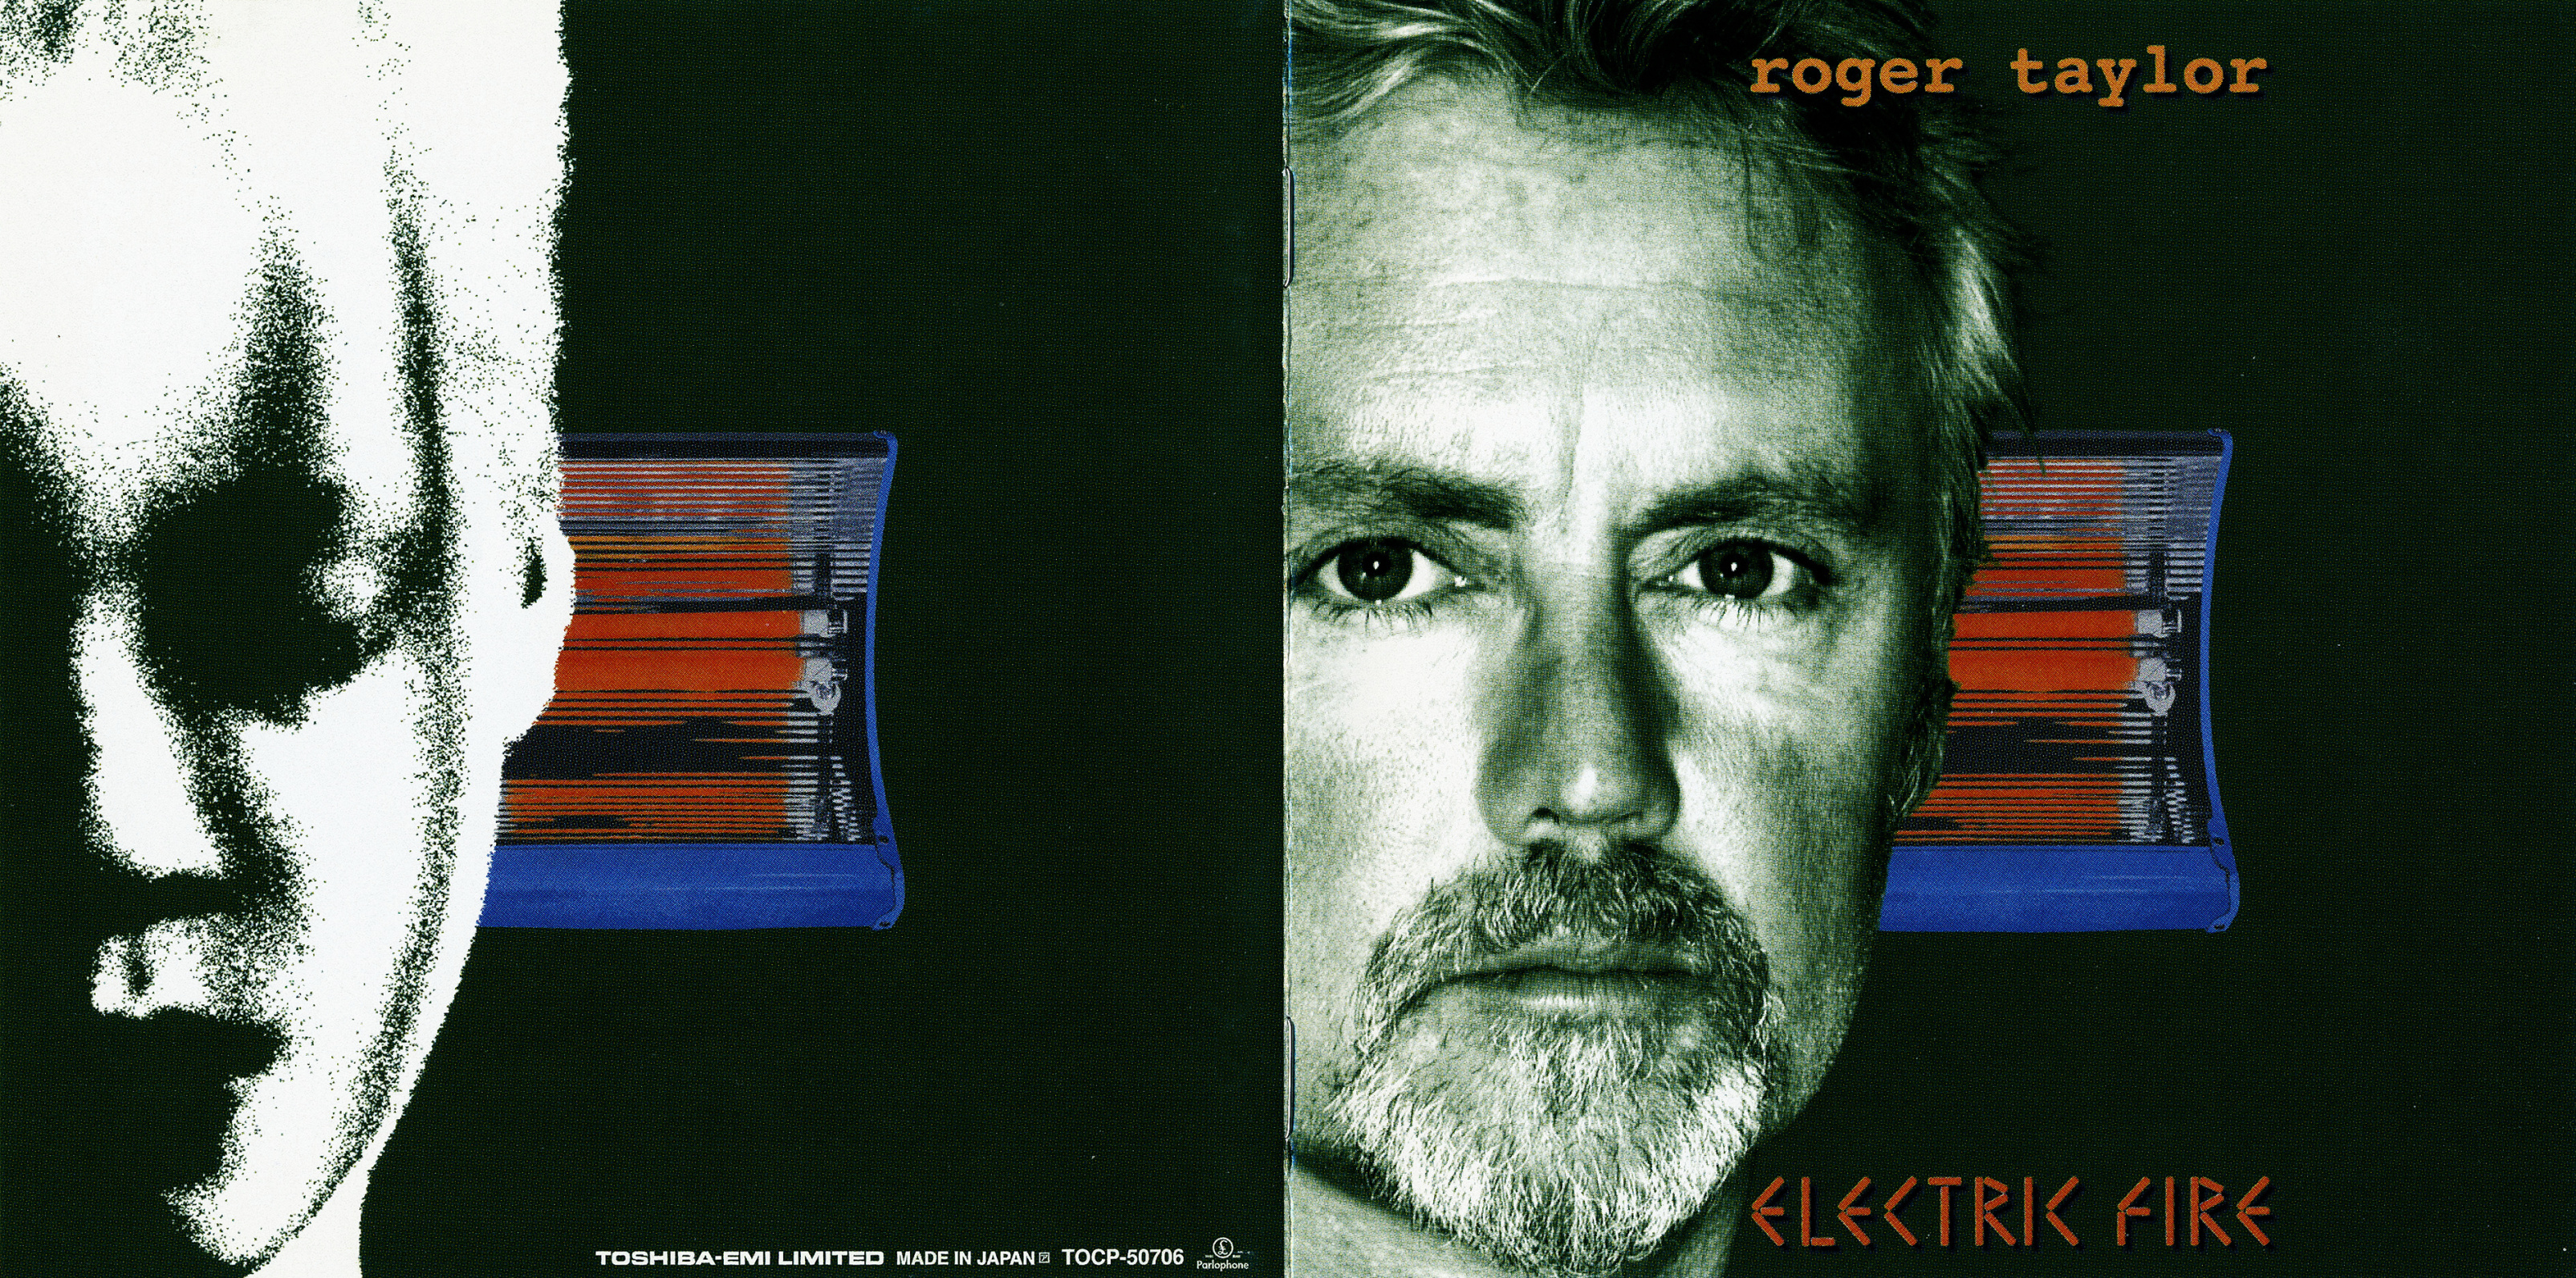 Galeria - Roger Taylor - Electric Fire - Full.jpg